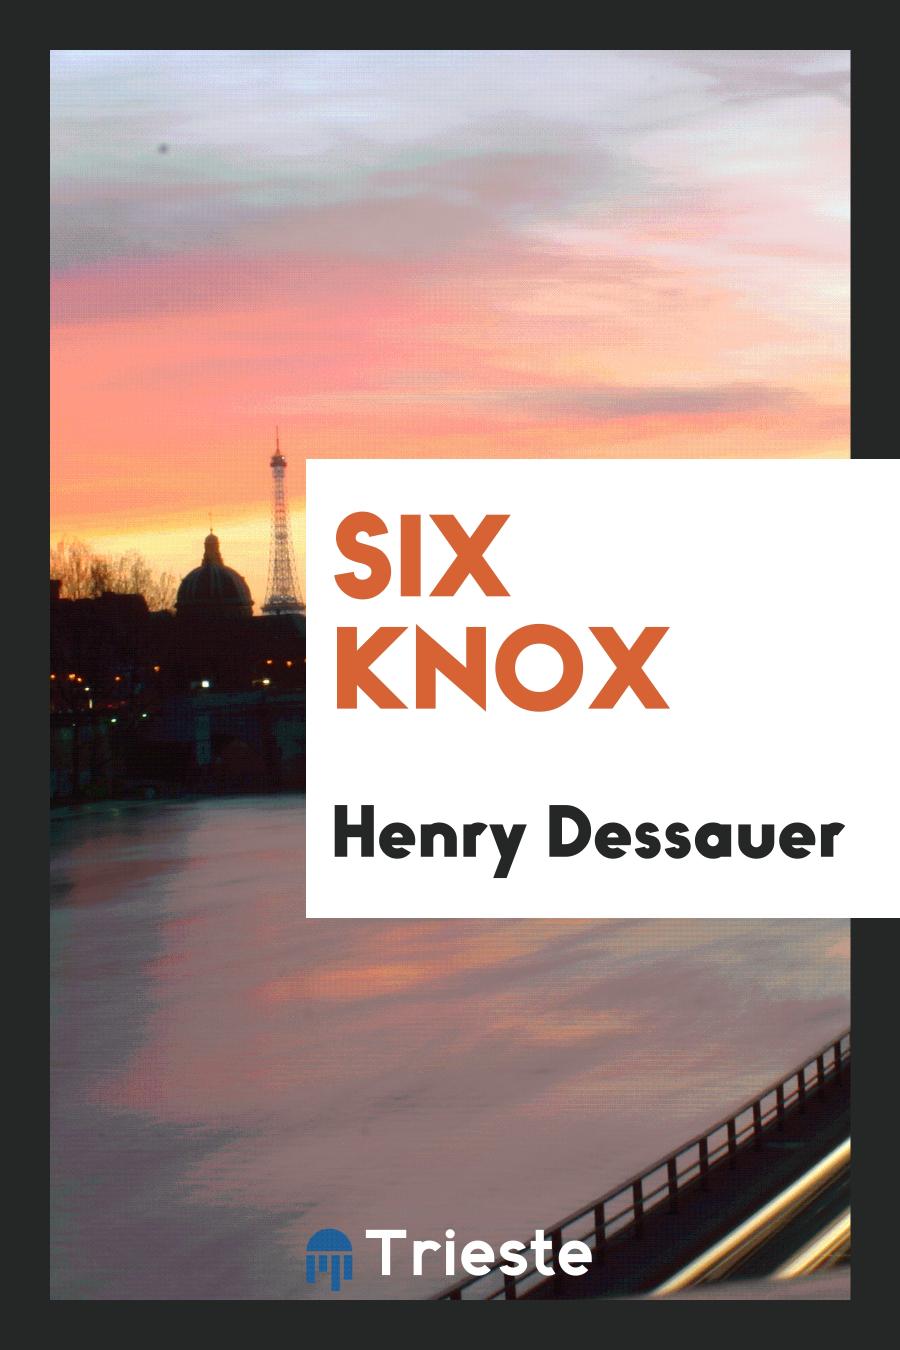 Six Knox